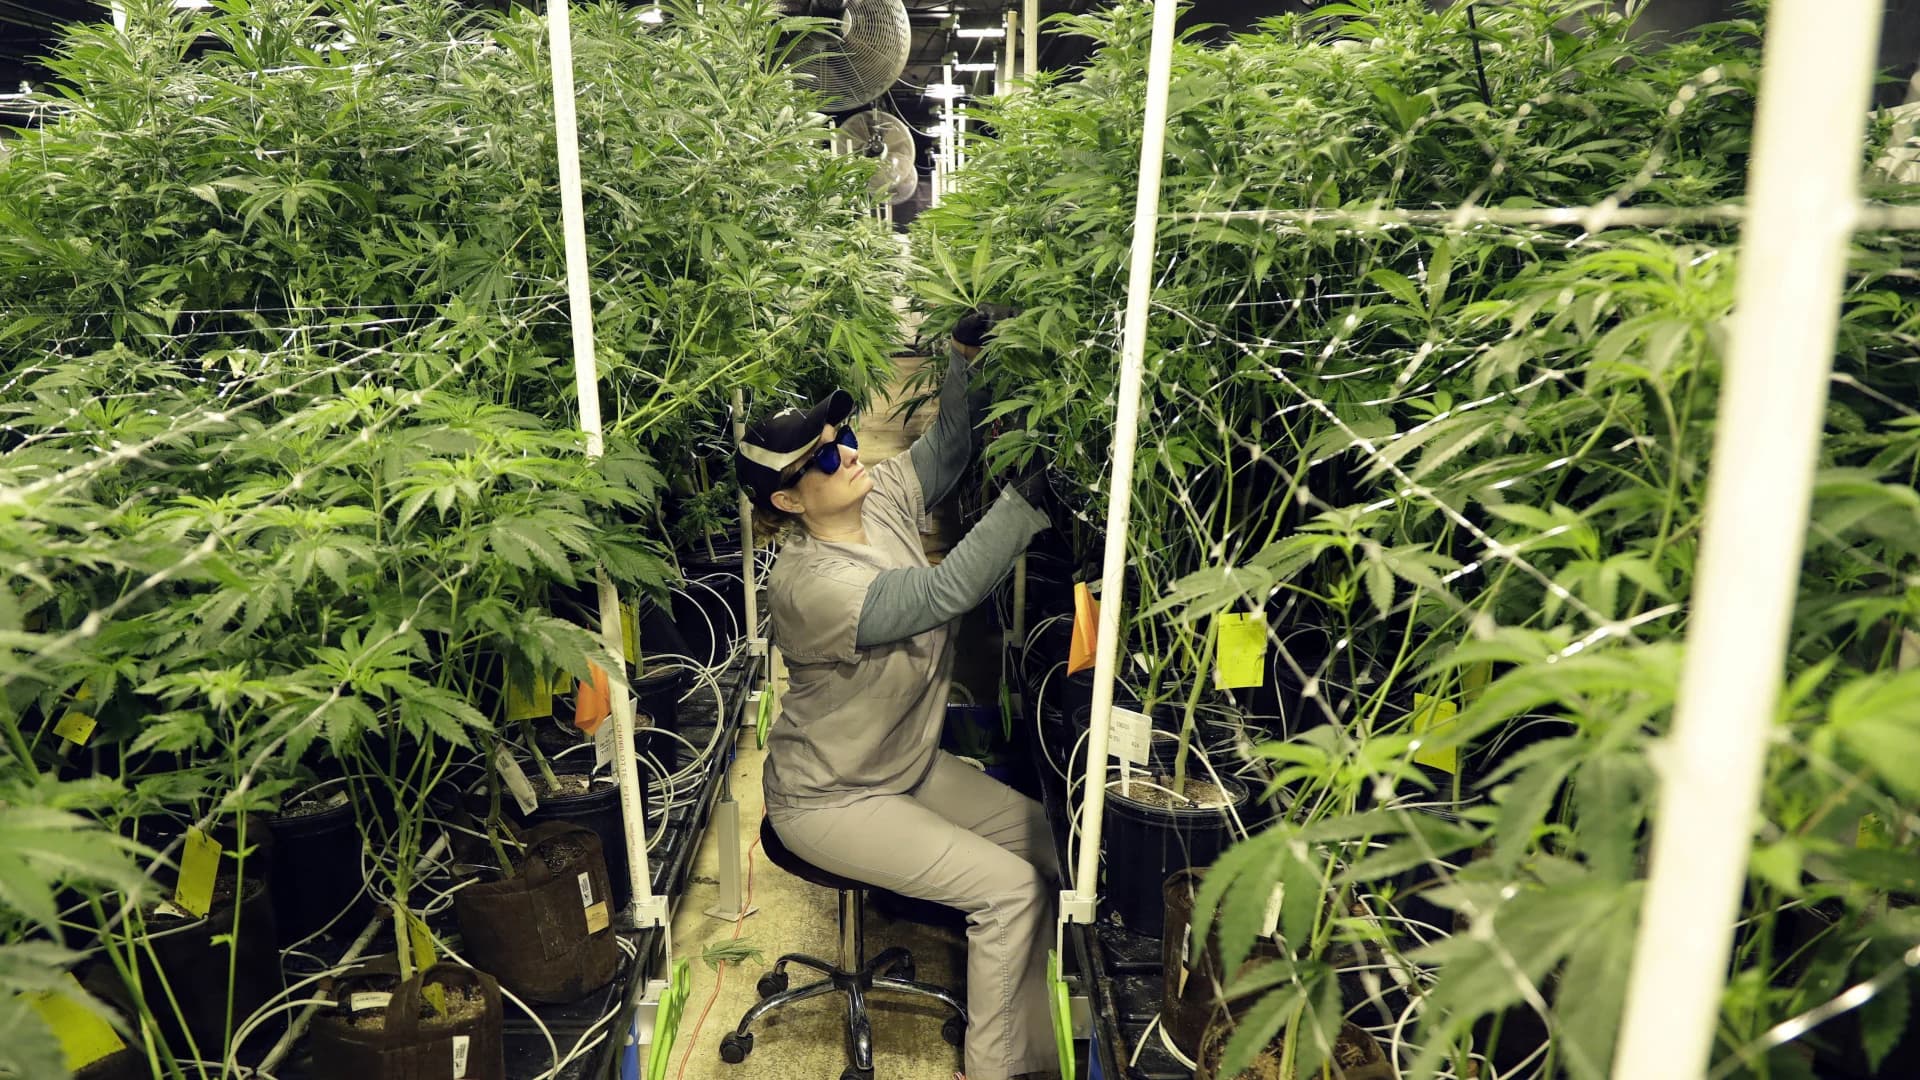 Gov. Cuomo proposes legalizing ‘adult-use’ marijuana, creating office to regulate it